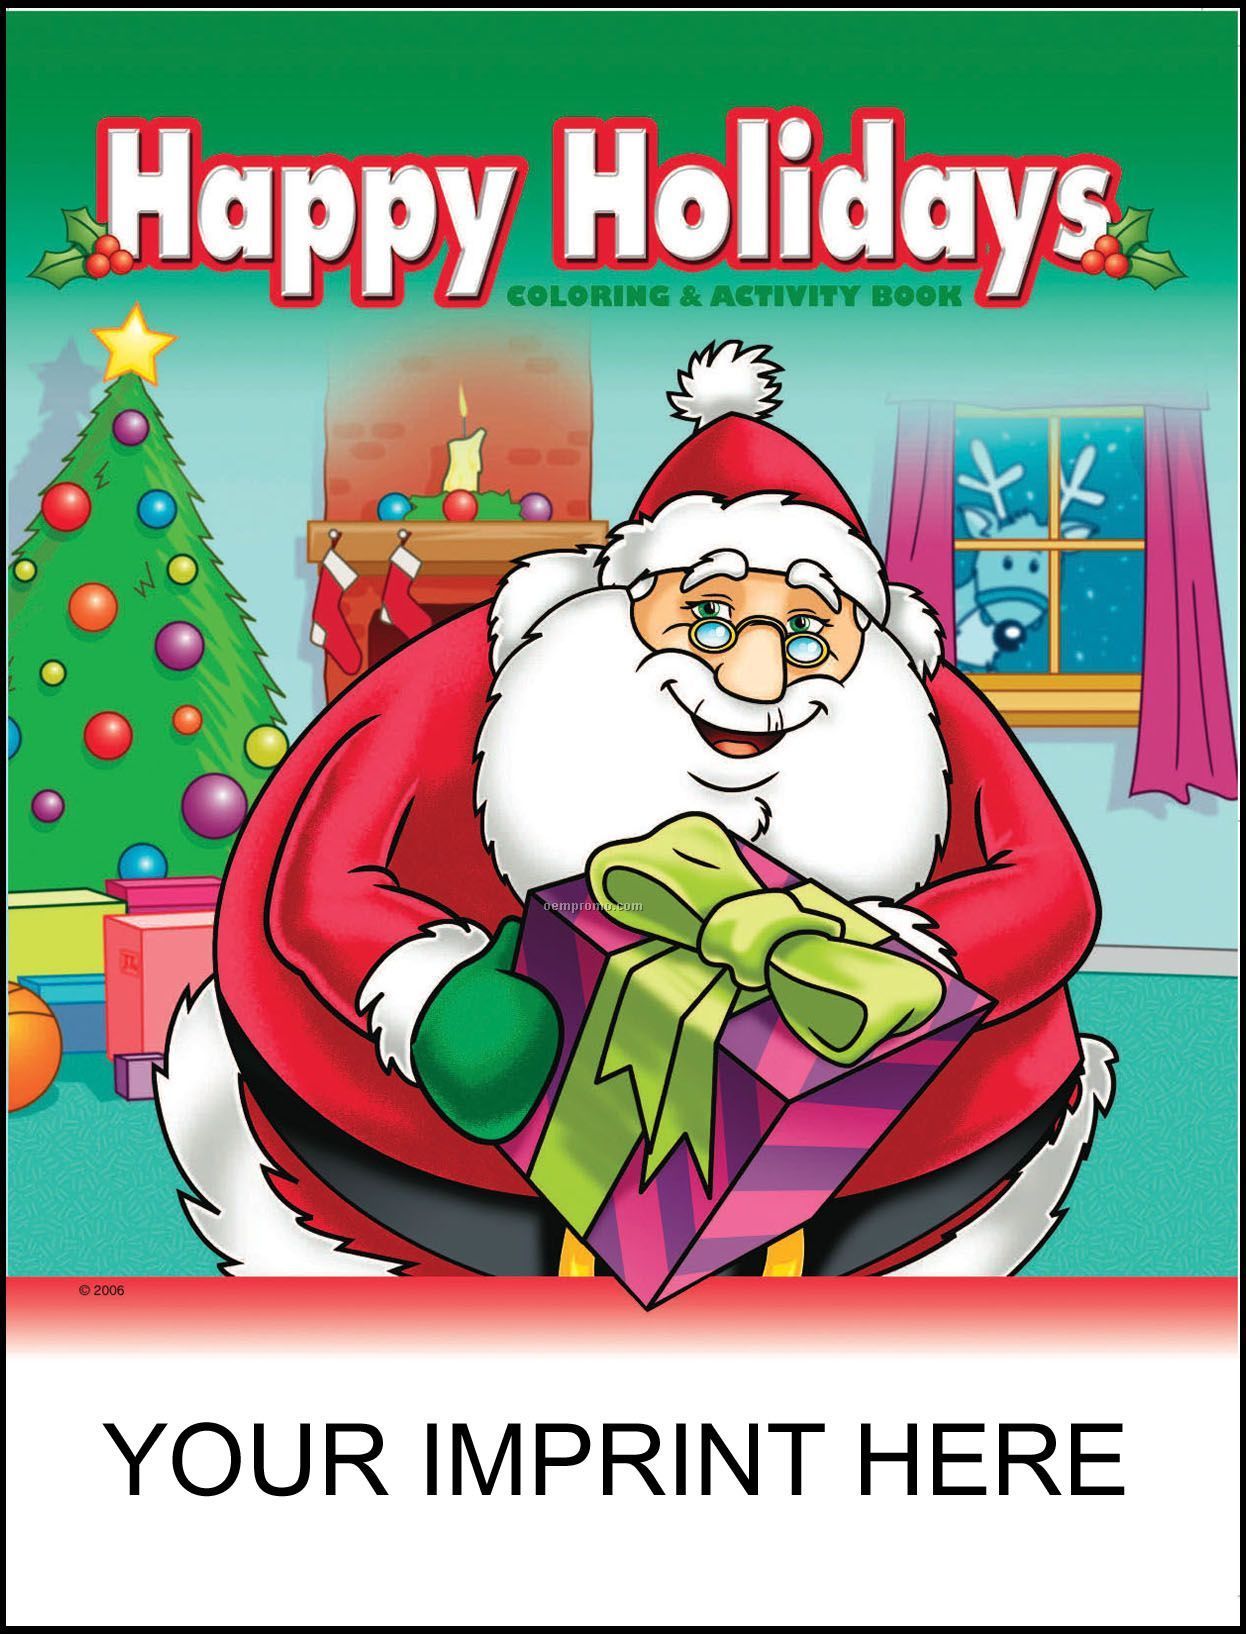 Happy Holidays Coloring & Activity Book - Santa Holding Gift